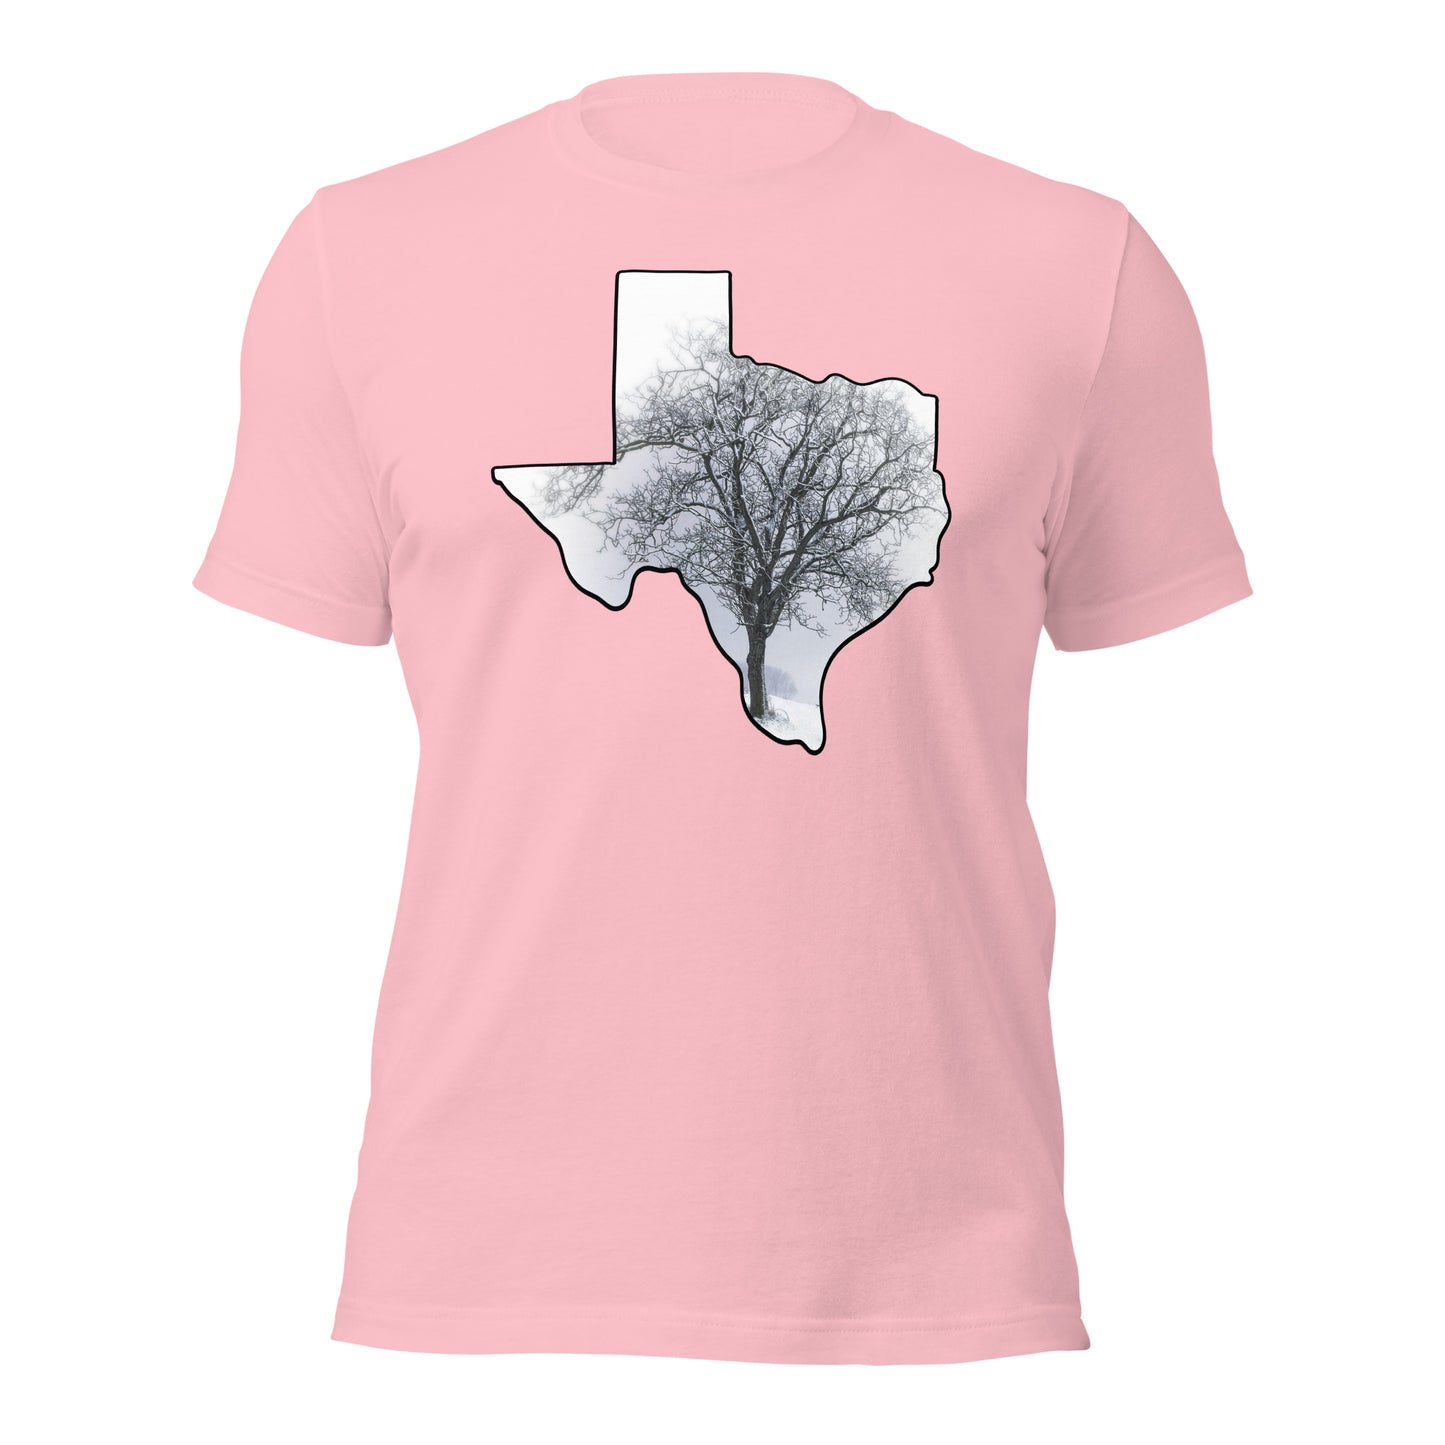 Unisex Texas T-shirt, Texas Shirt, Texas Tee, Texas Tshirt, Tshirts for Women, Texas Gift Shirt, Tshirts for Men, State Shirt